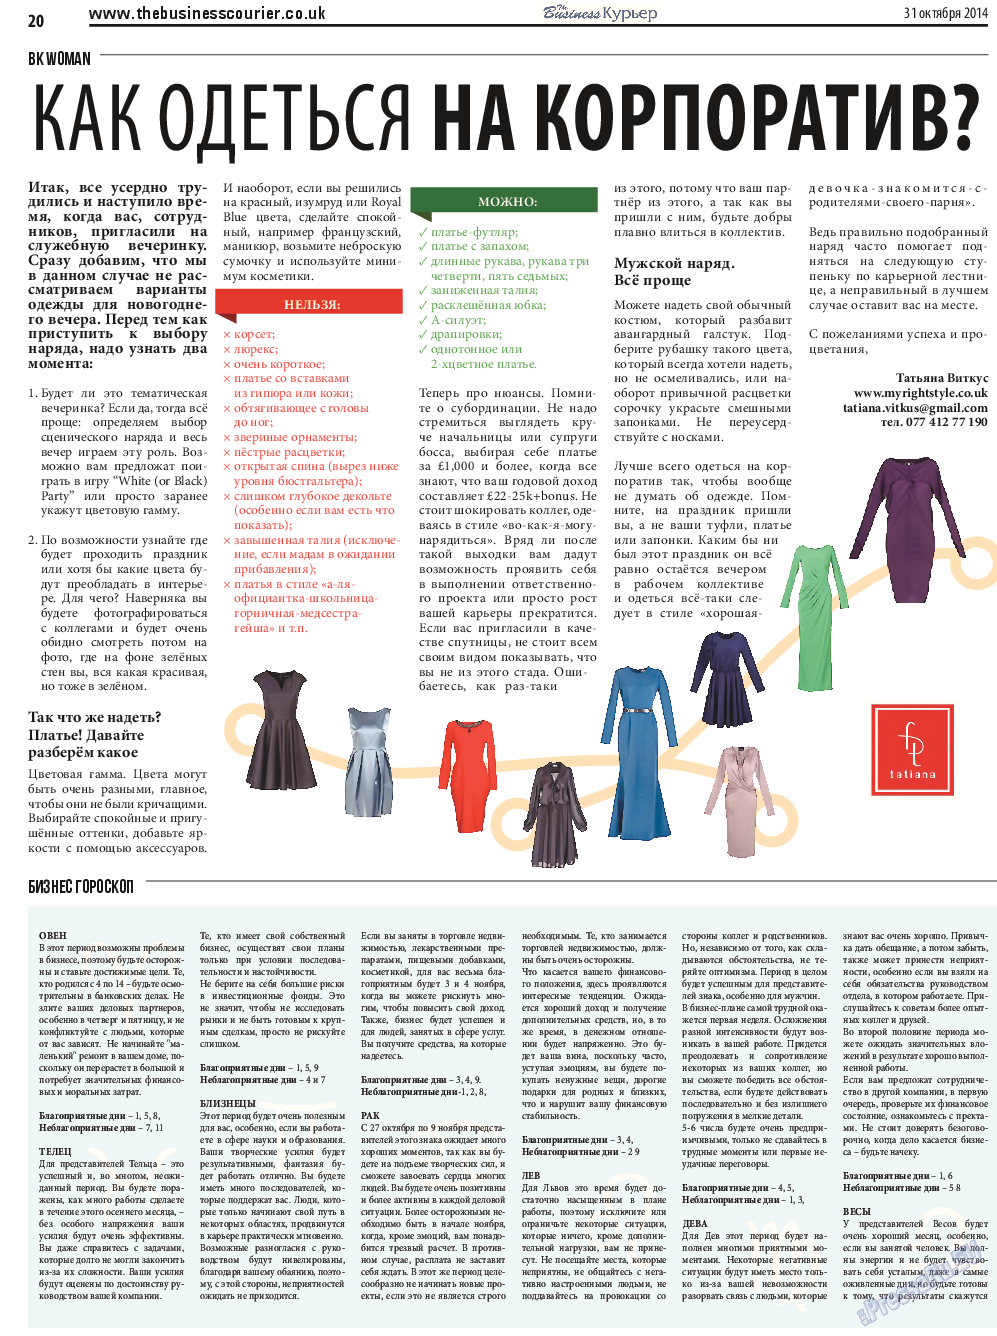 The Business Курьер, газета. 2014 №26 стр.20